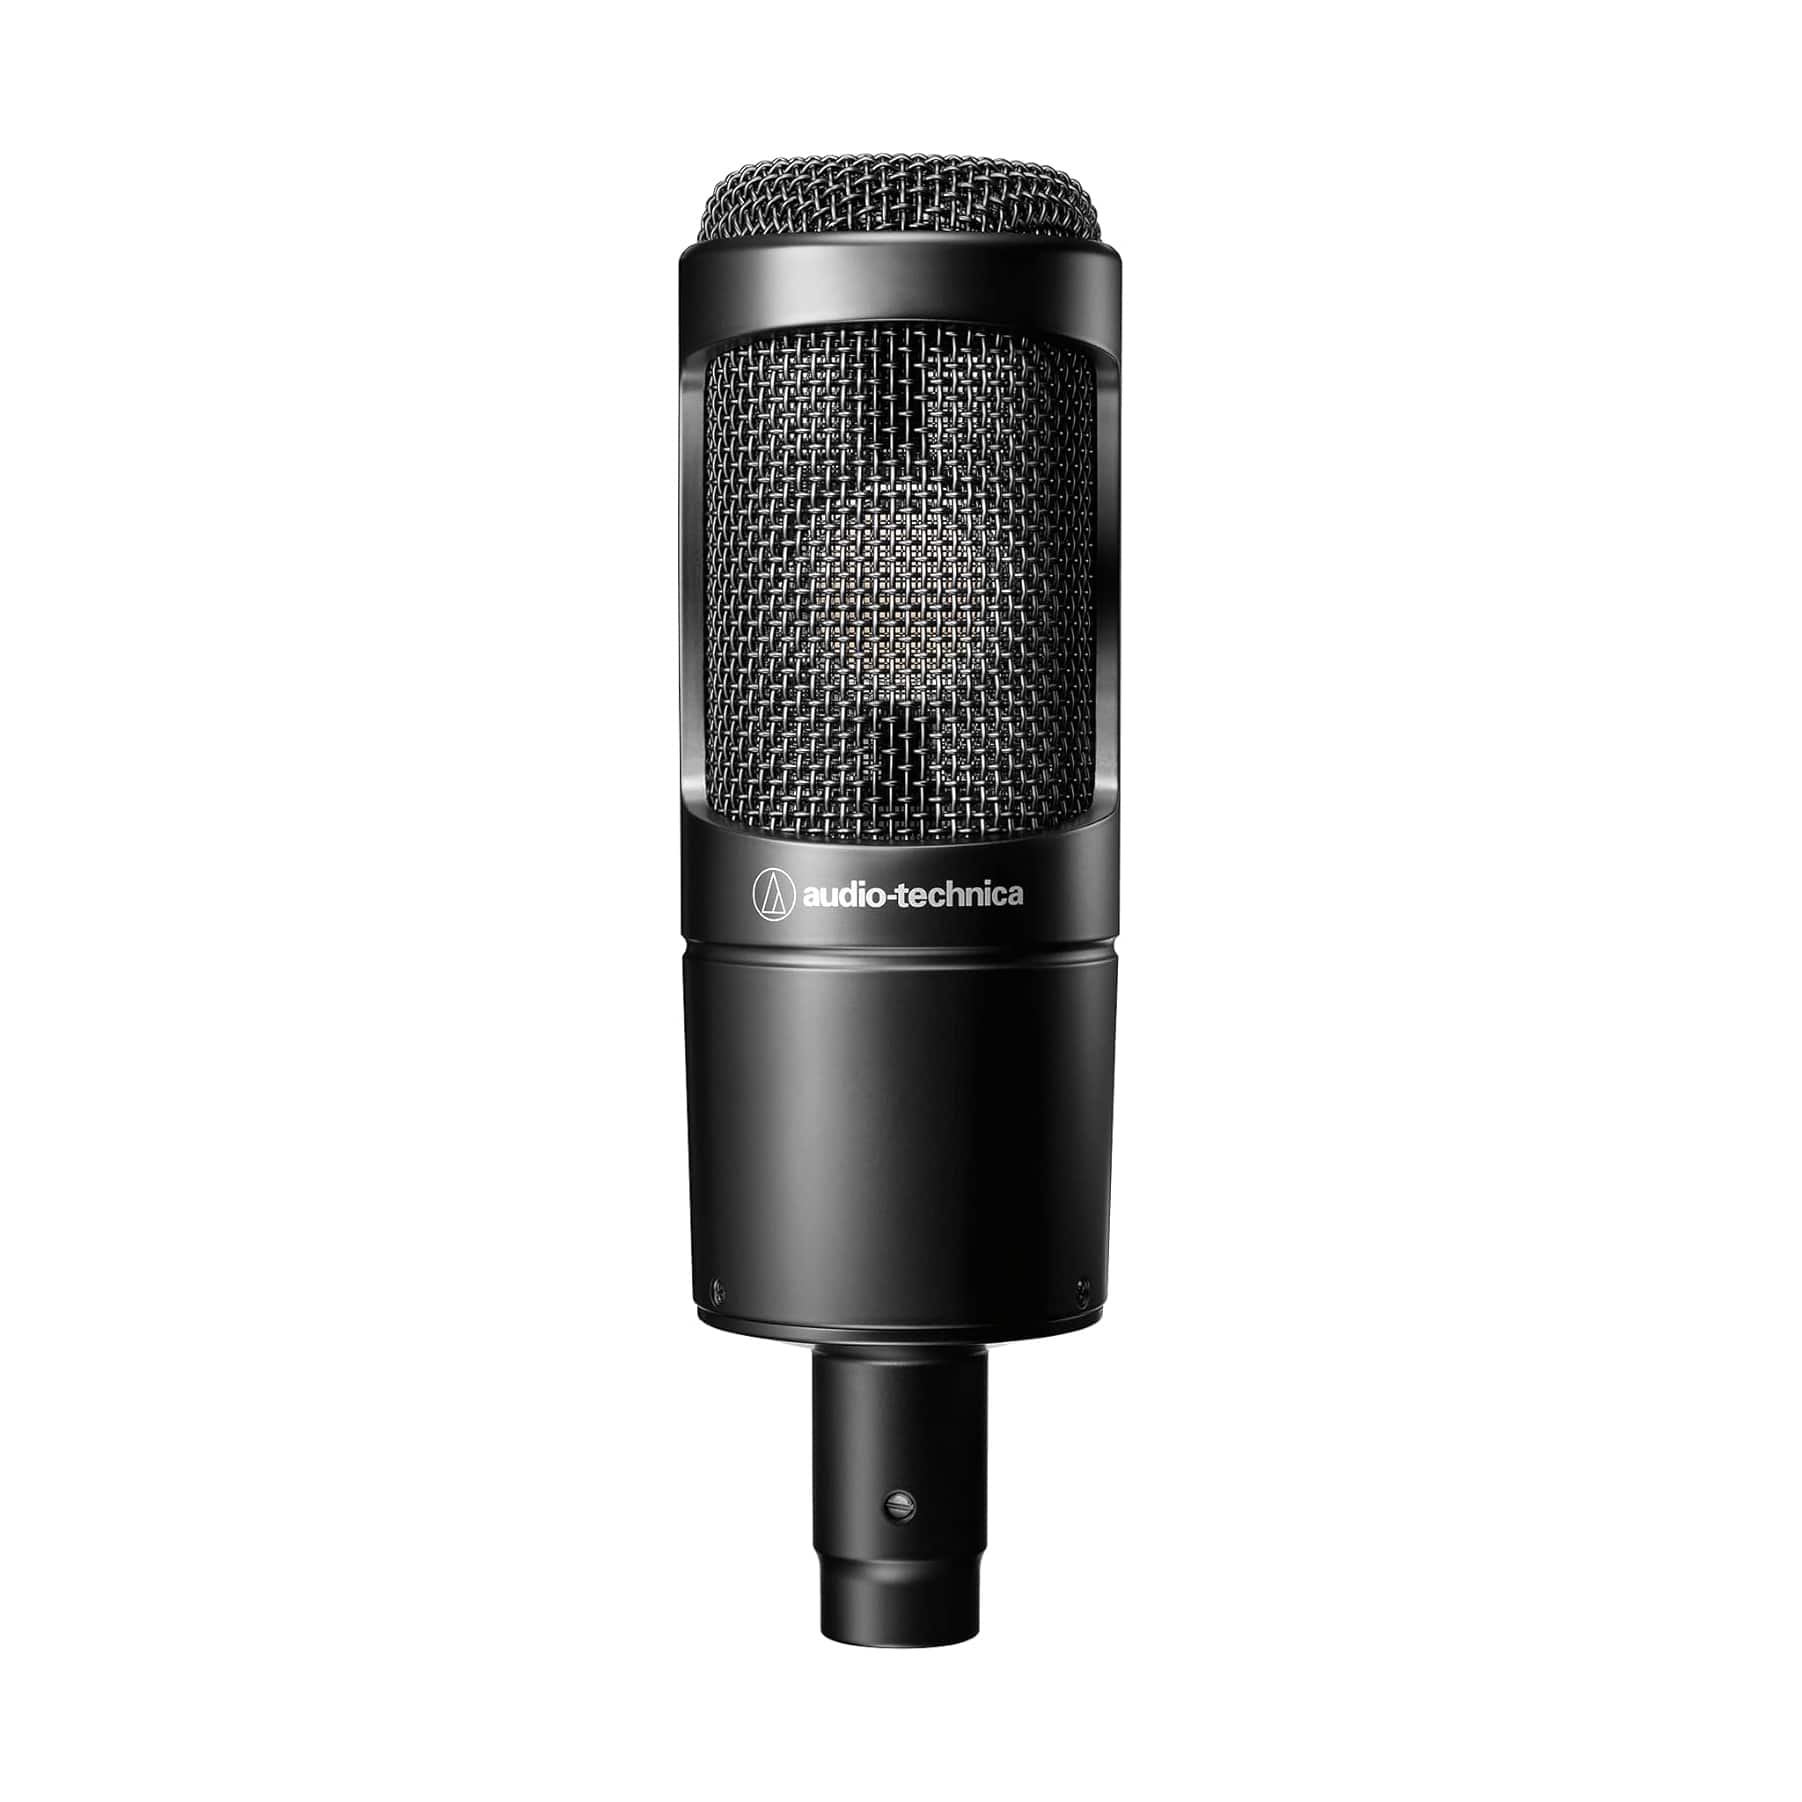 Audio-Technica AT2035 Cardioid Condenser Microphone with Custom Shock Mount Audio  |  Microphones  |